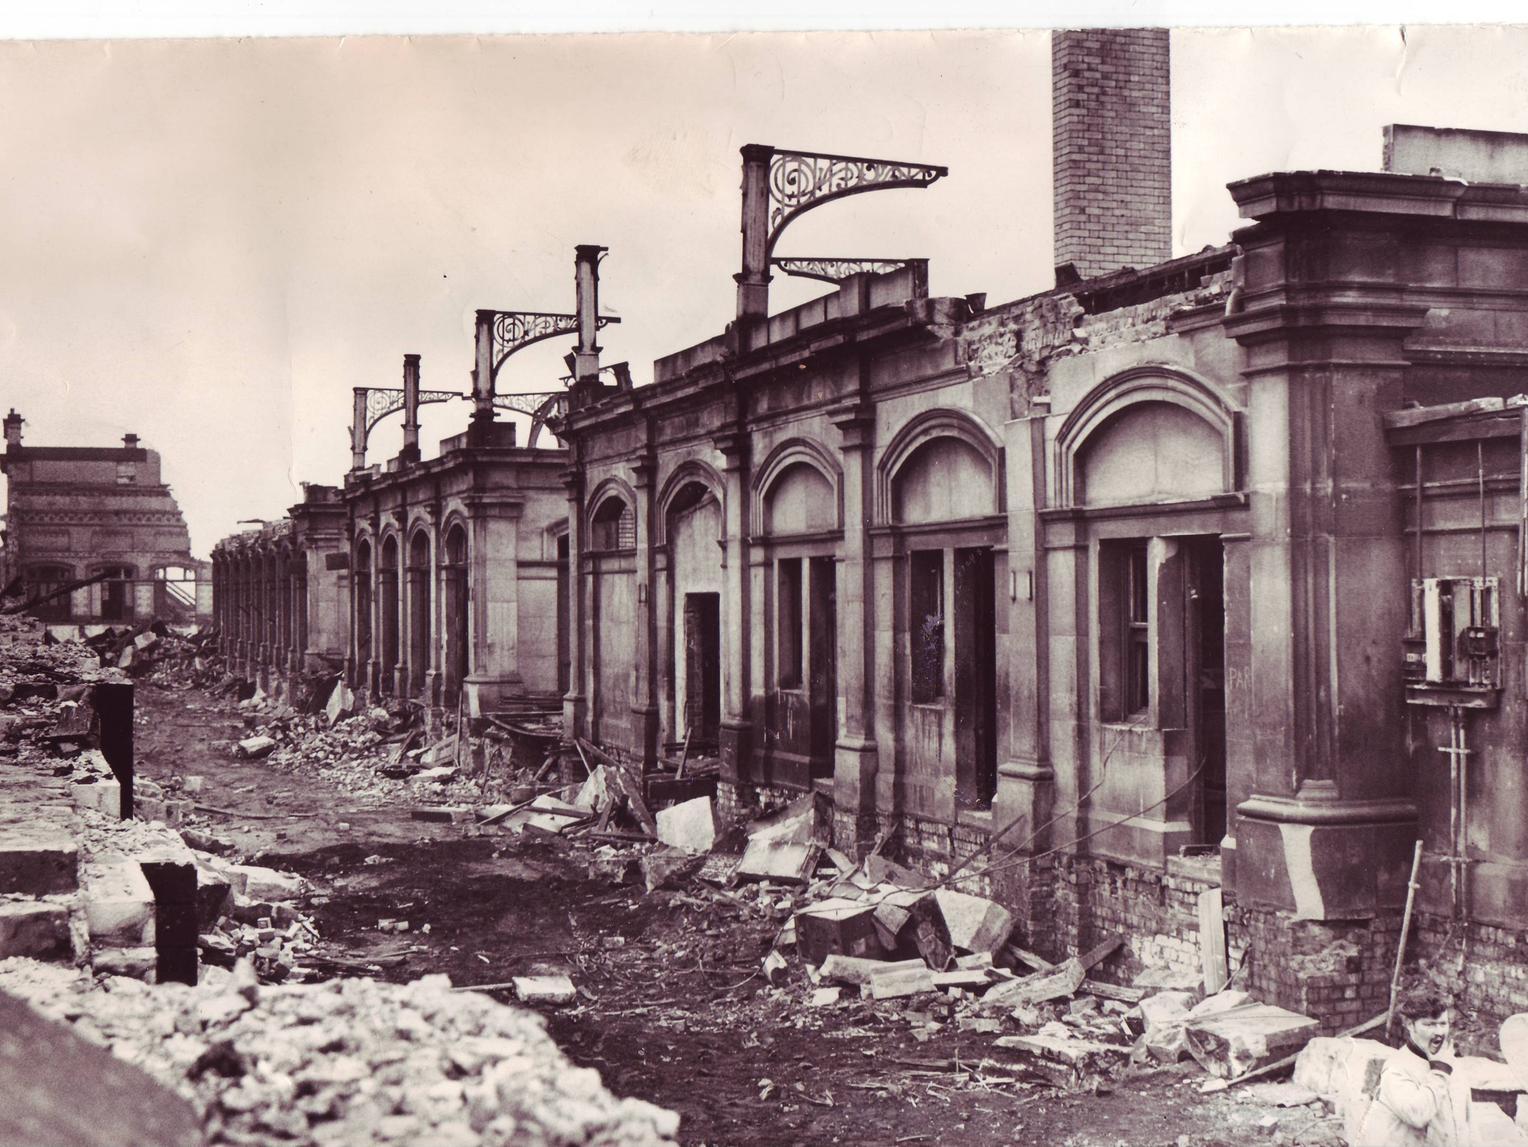 Demolition of Fleetwood Railway Station